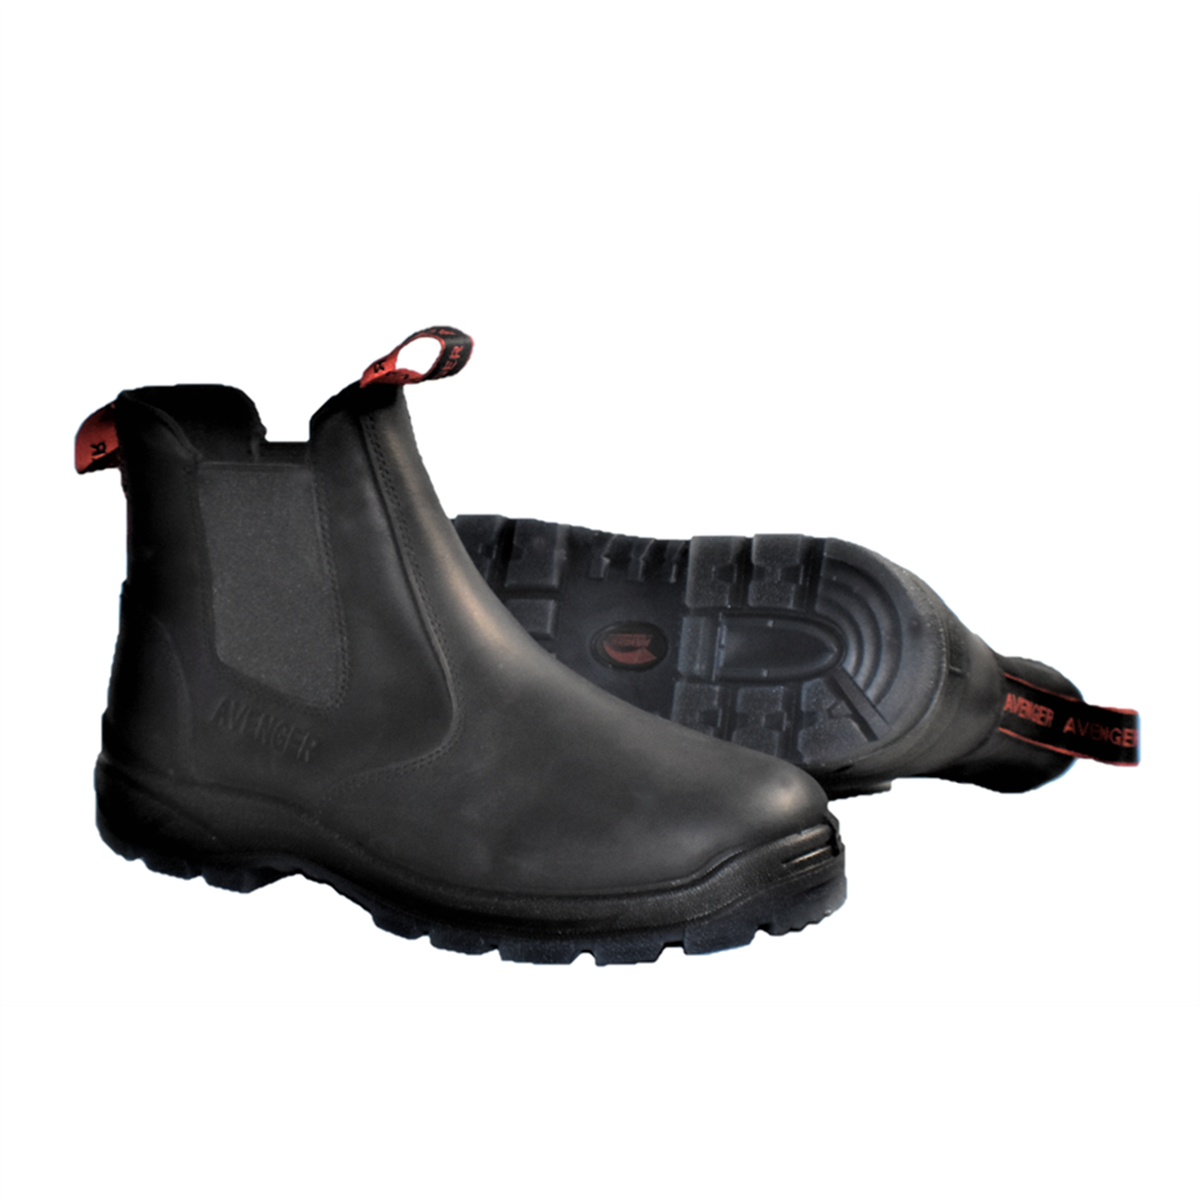 FSI Footwear Specialities International FSI FOOTWEAR SPECIALTIES INTERNATIONAL NAUTILUS Avenger Men's Black Widow Chelsea Composite Toe PR Work Boot Black - A1700